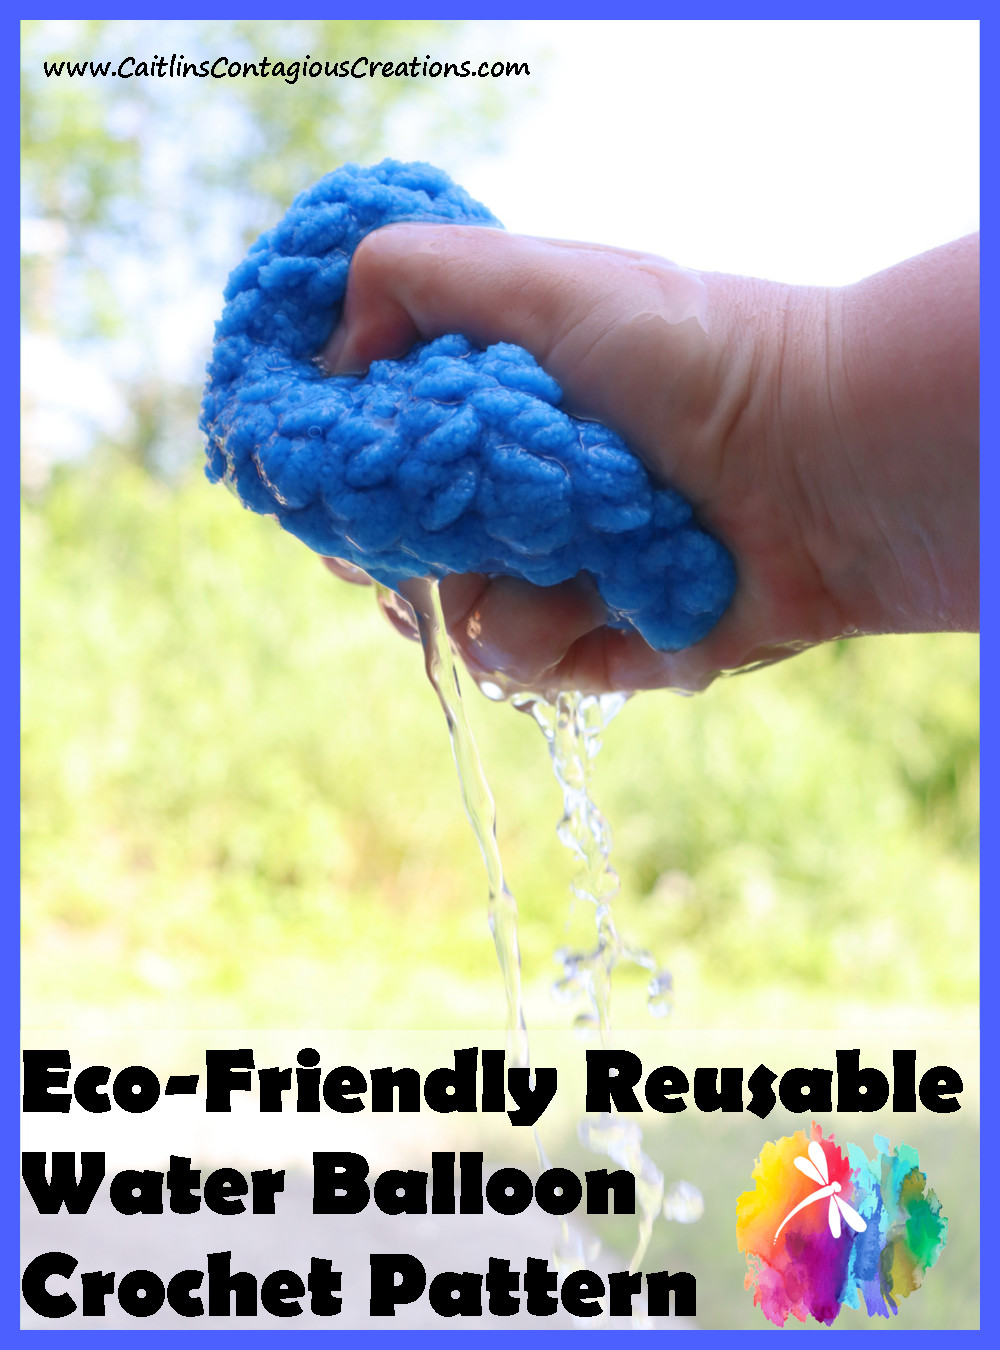 Reusable Water Balloon Free Crochet Pattern Pin Image 2